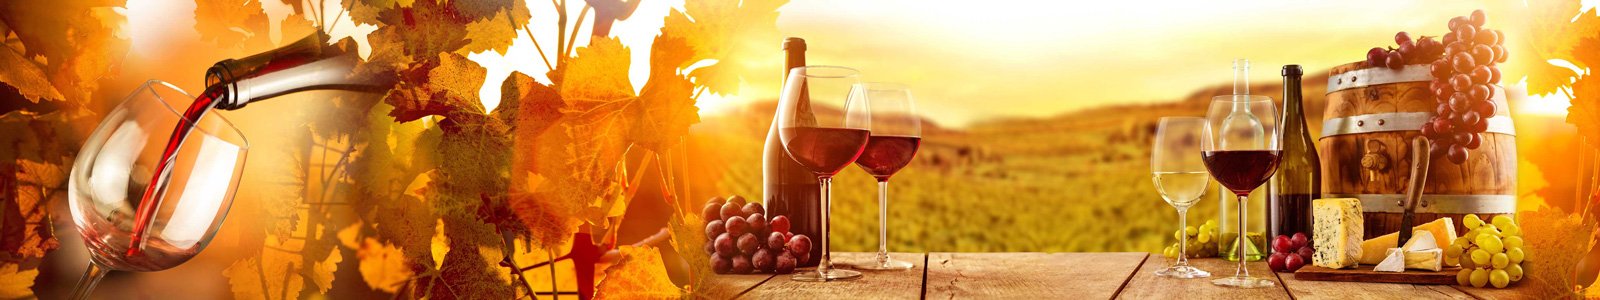 №6906 - Вино и виноград на столе